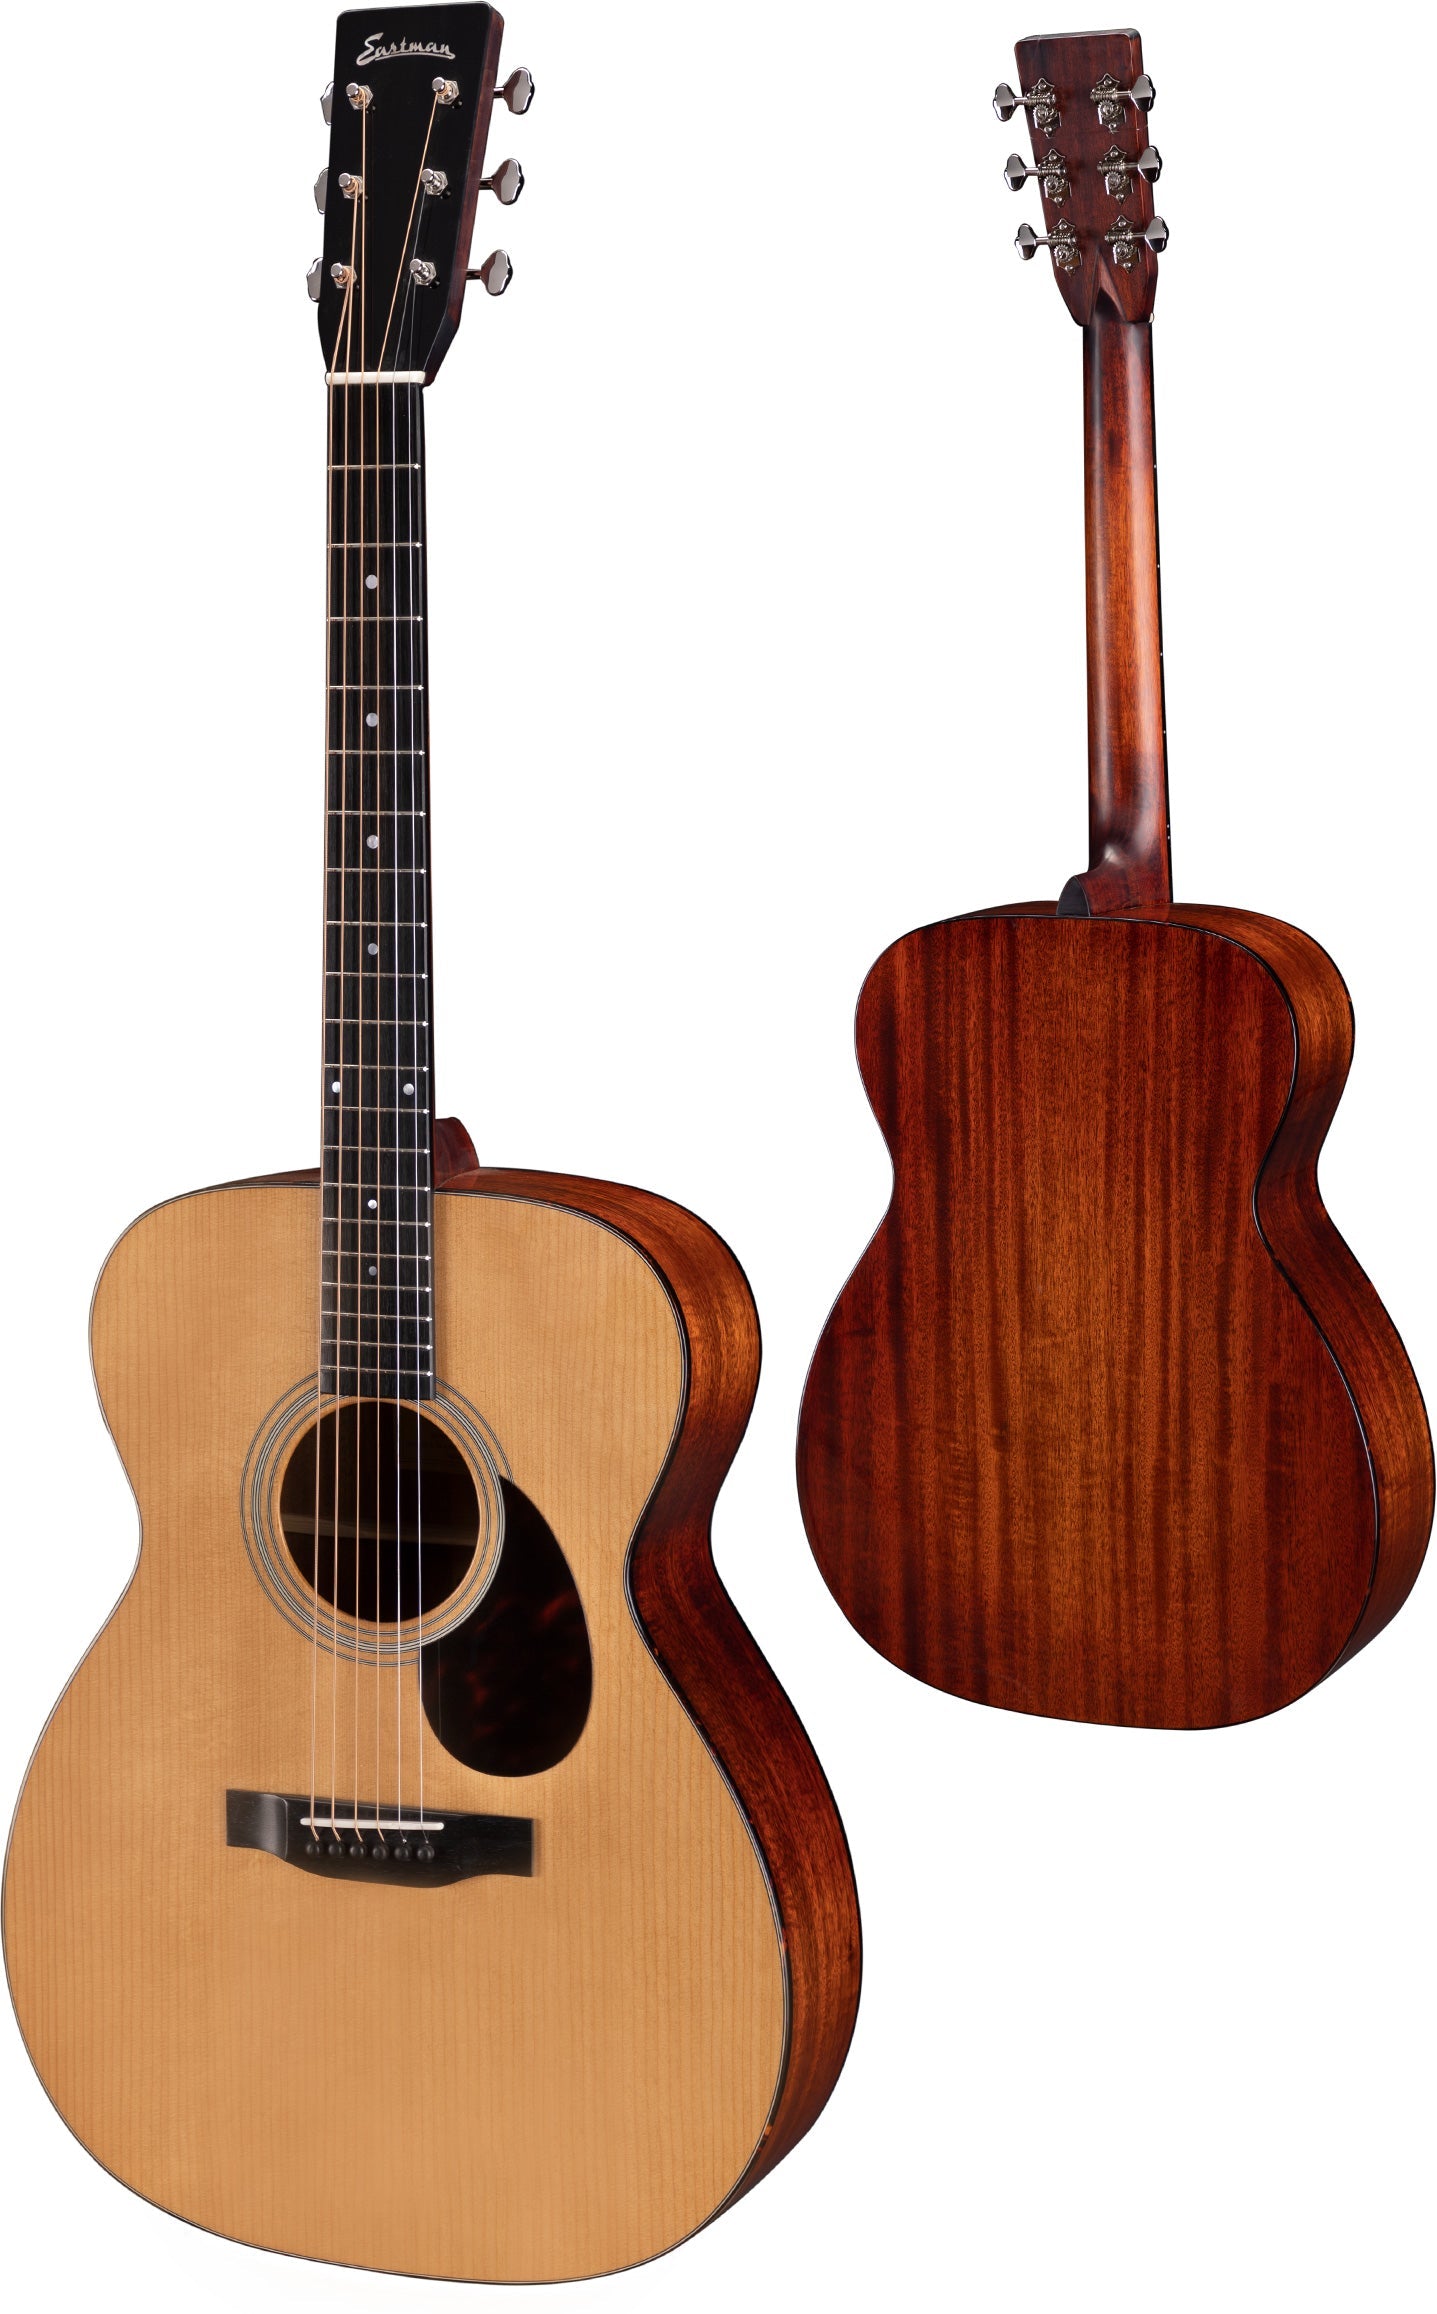 Eastman E10 OM-TC, Acoustic Guitar for sale at Richards Guitars.